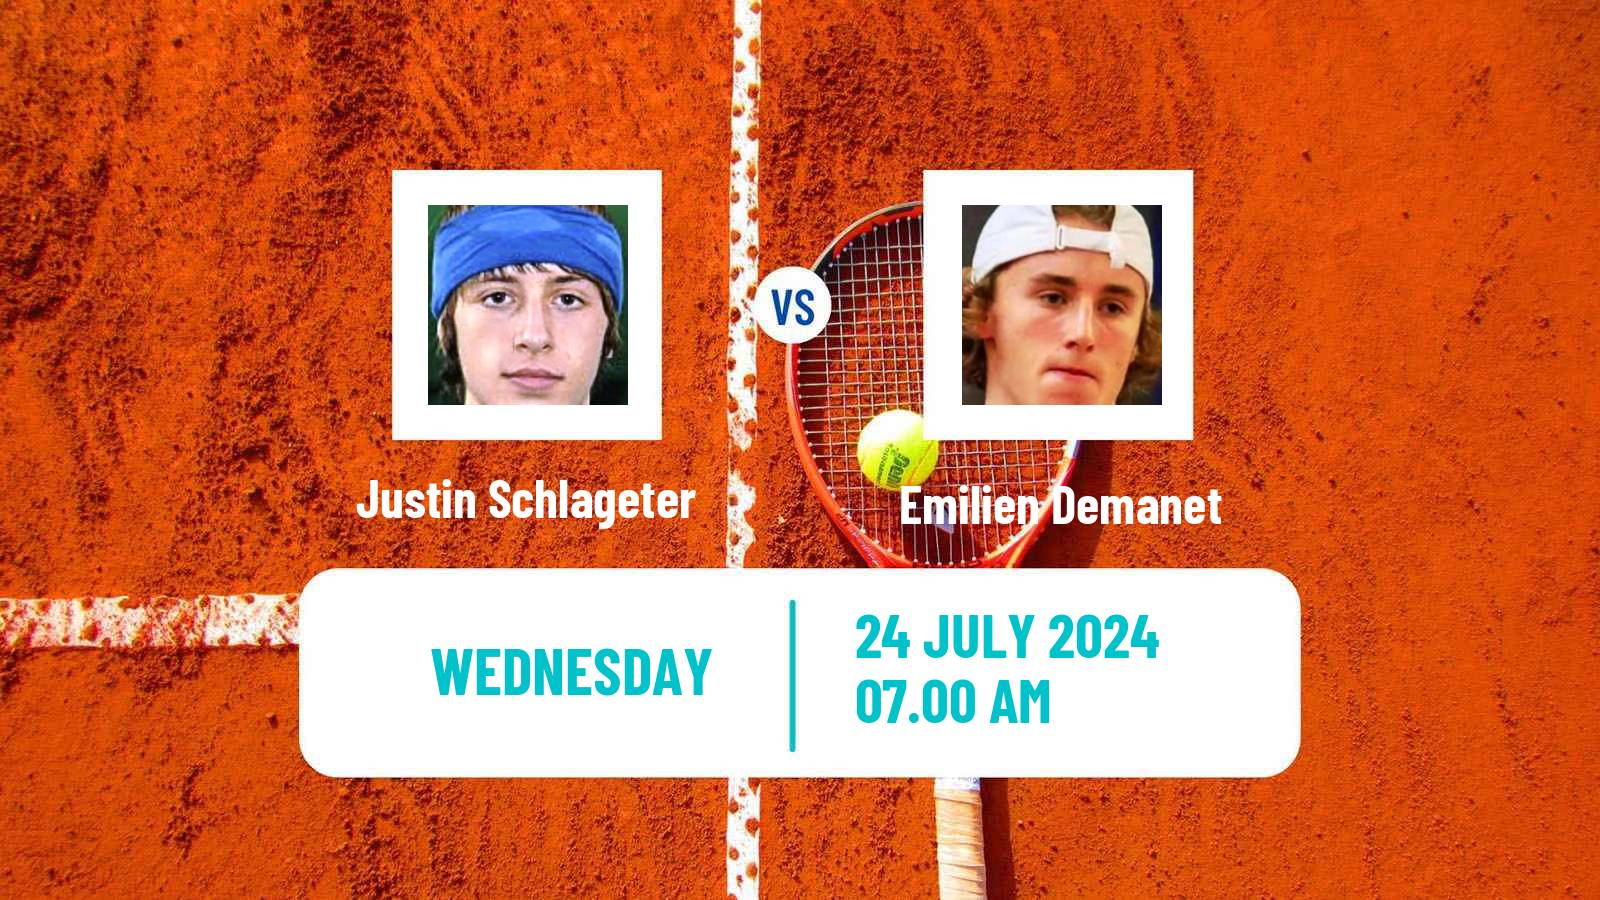 Tennis ITF M15 Metzingen Men Justin Schlageter - Emilien Demanet